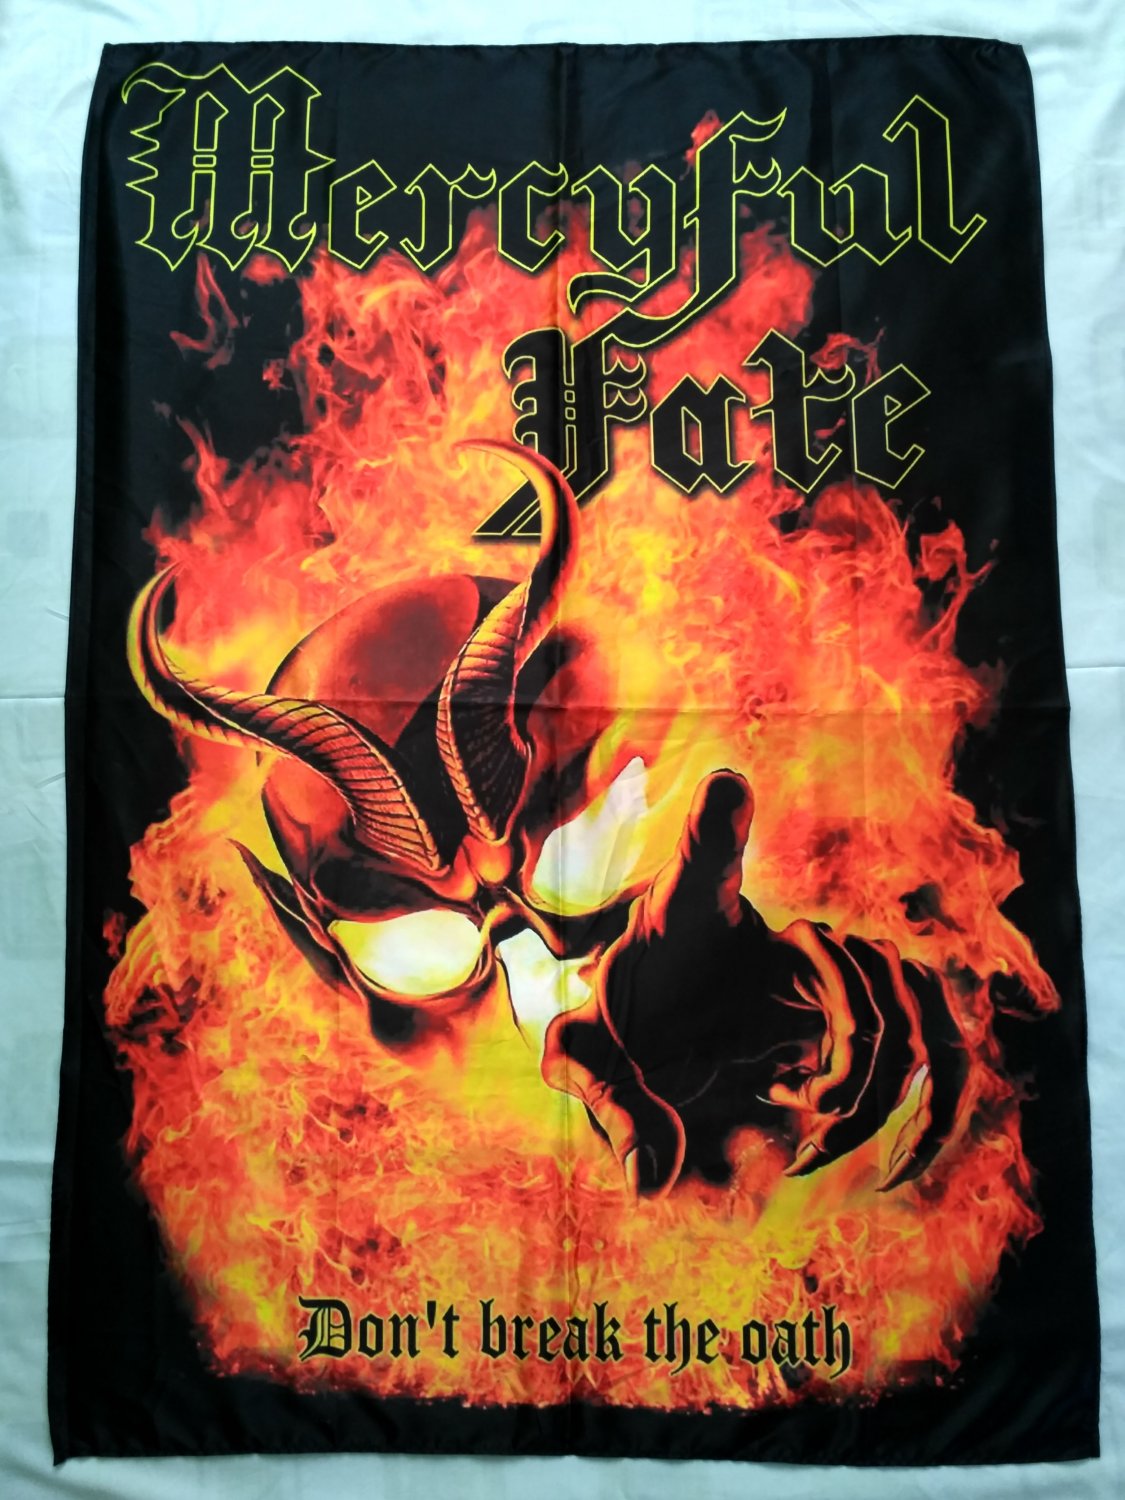 MERCYFUL FATE - Don't break the oath FLAG Heavy metal cloth poster King Diamond